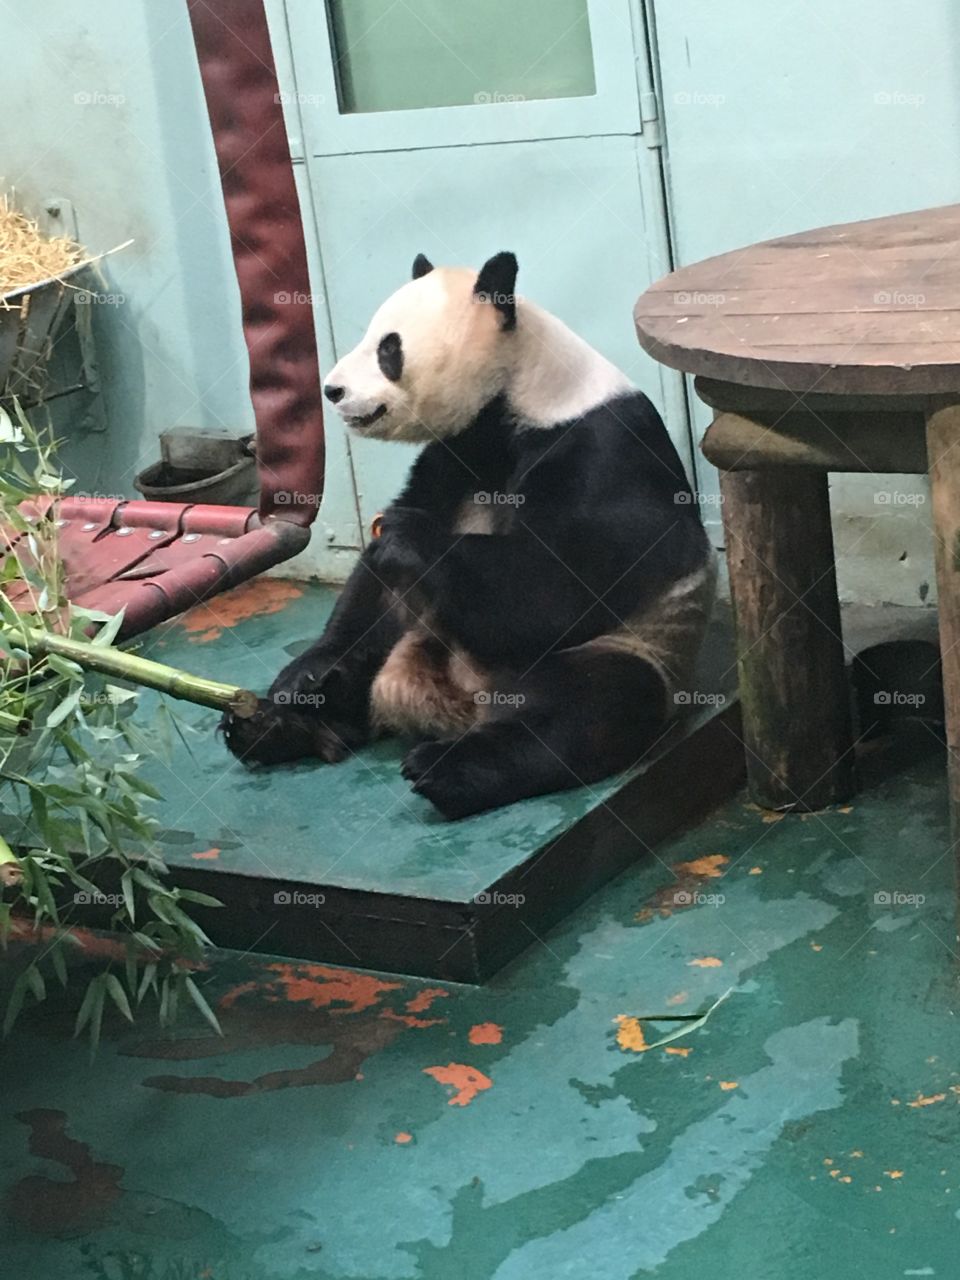 Pandas at Edinburgh zoo